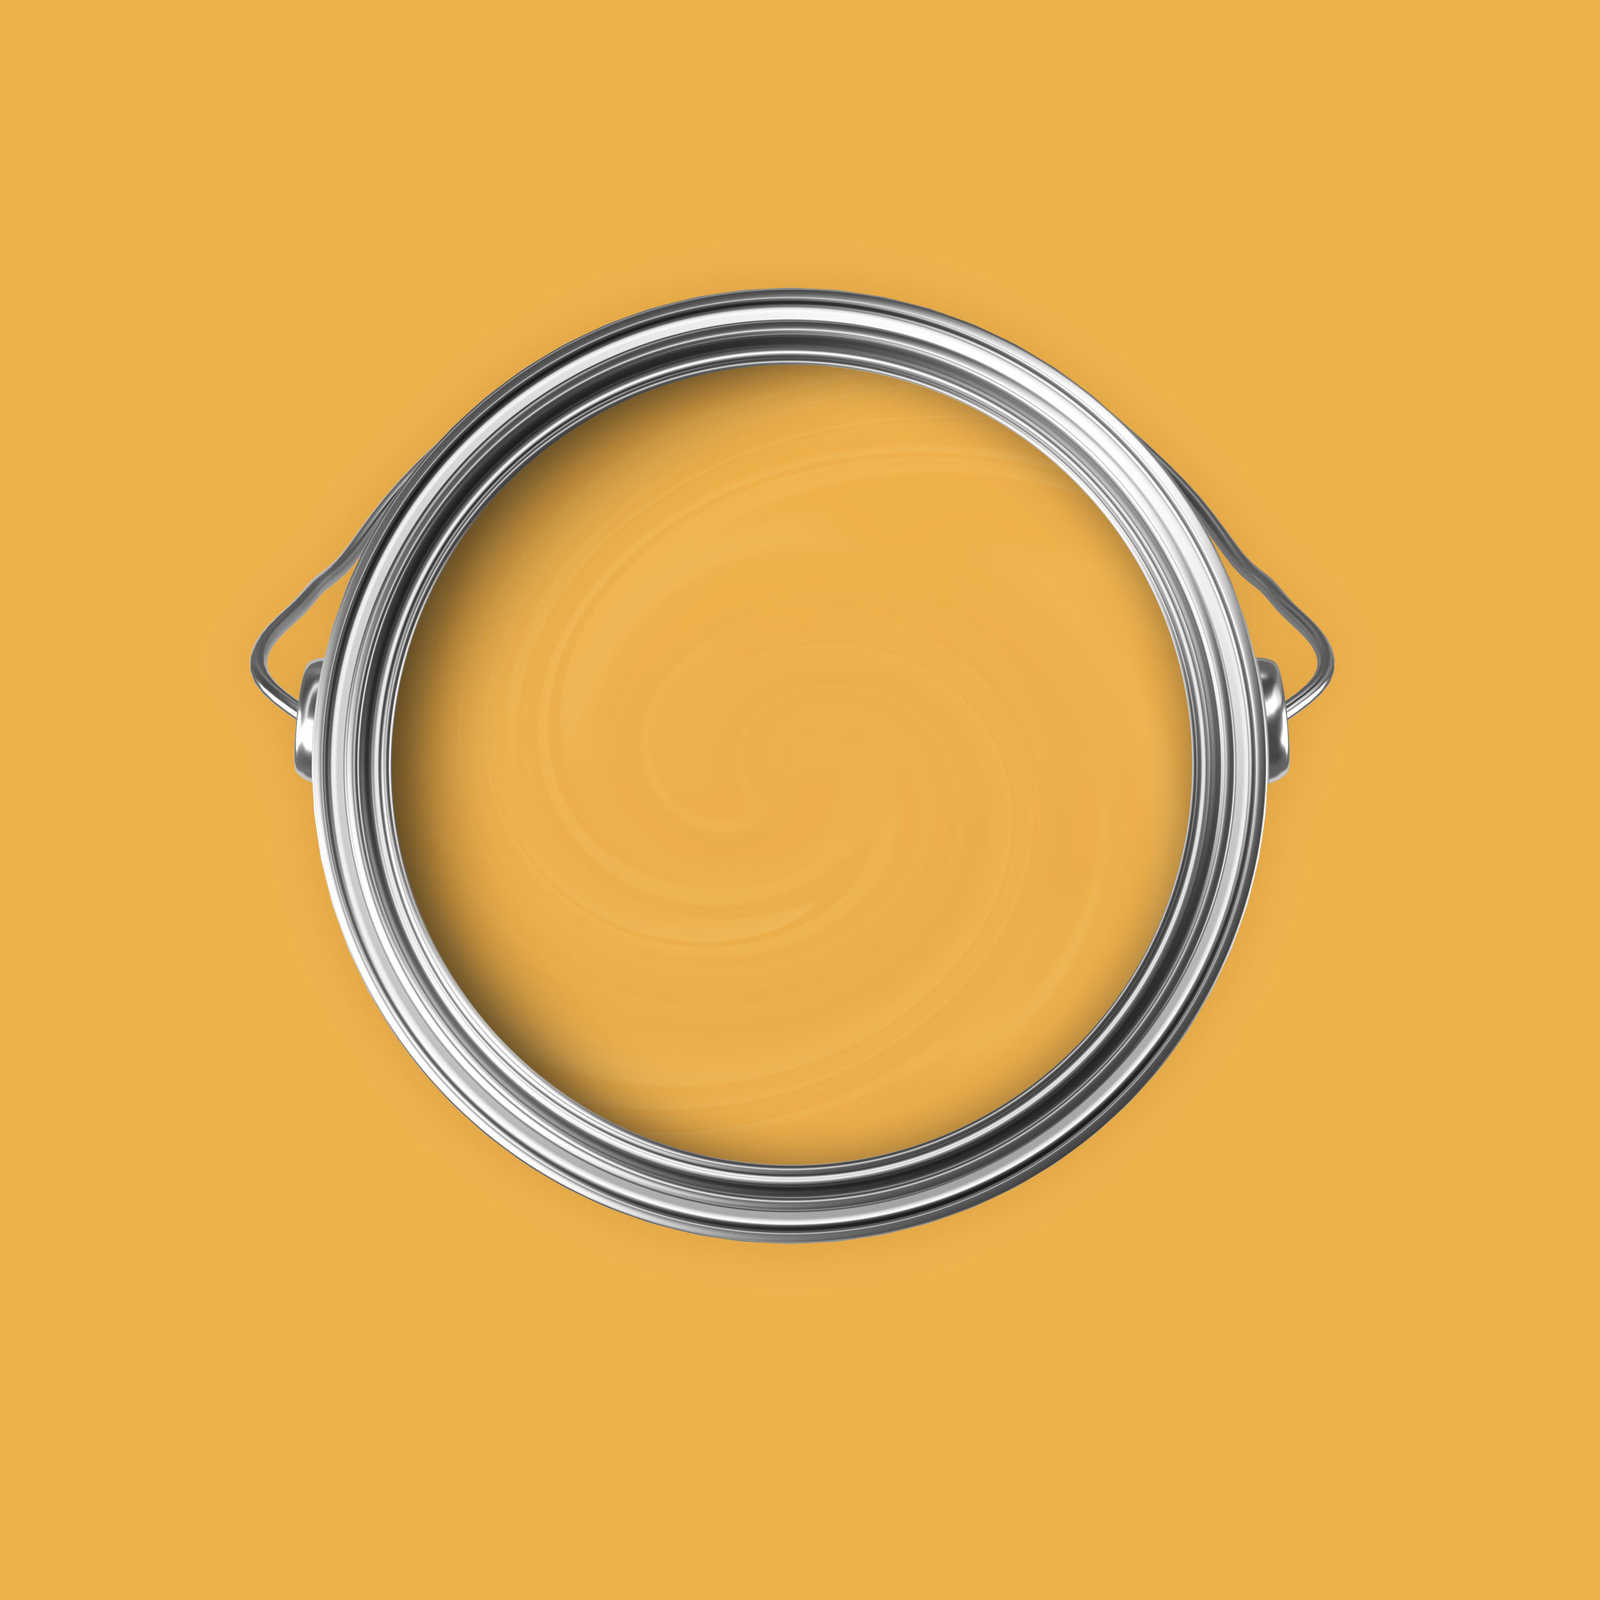             Pintura mural Premium fuerte amarillo azafrán »Juicy Yellow« NW806 – 5 litro
        